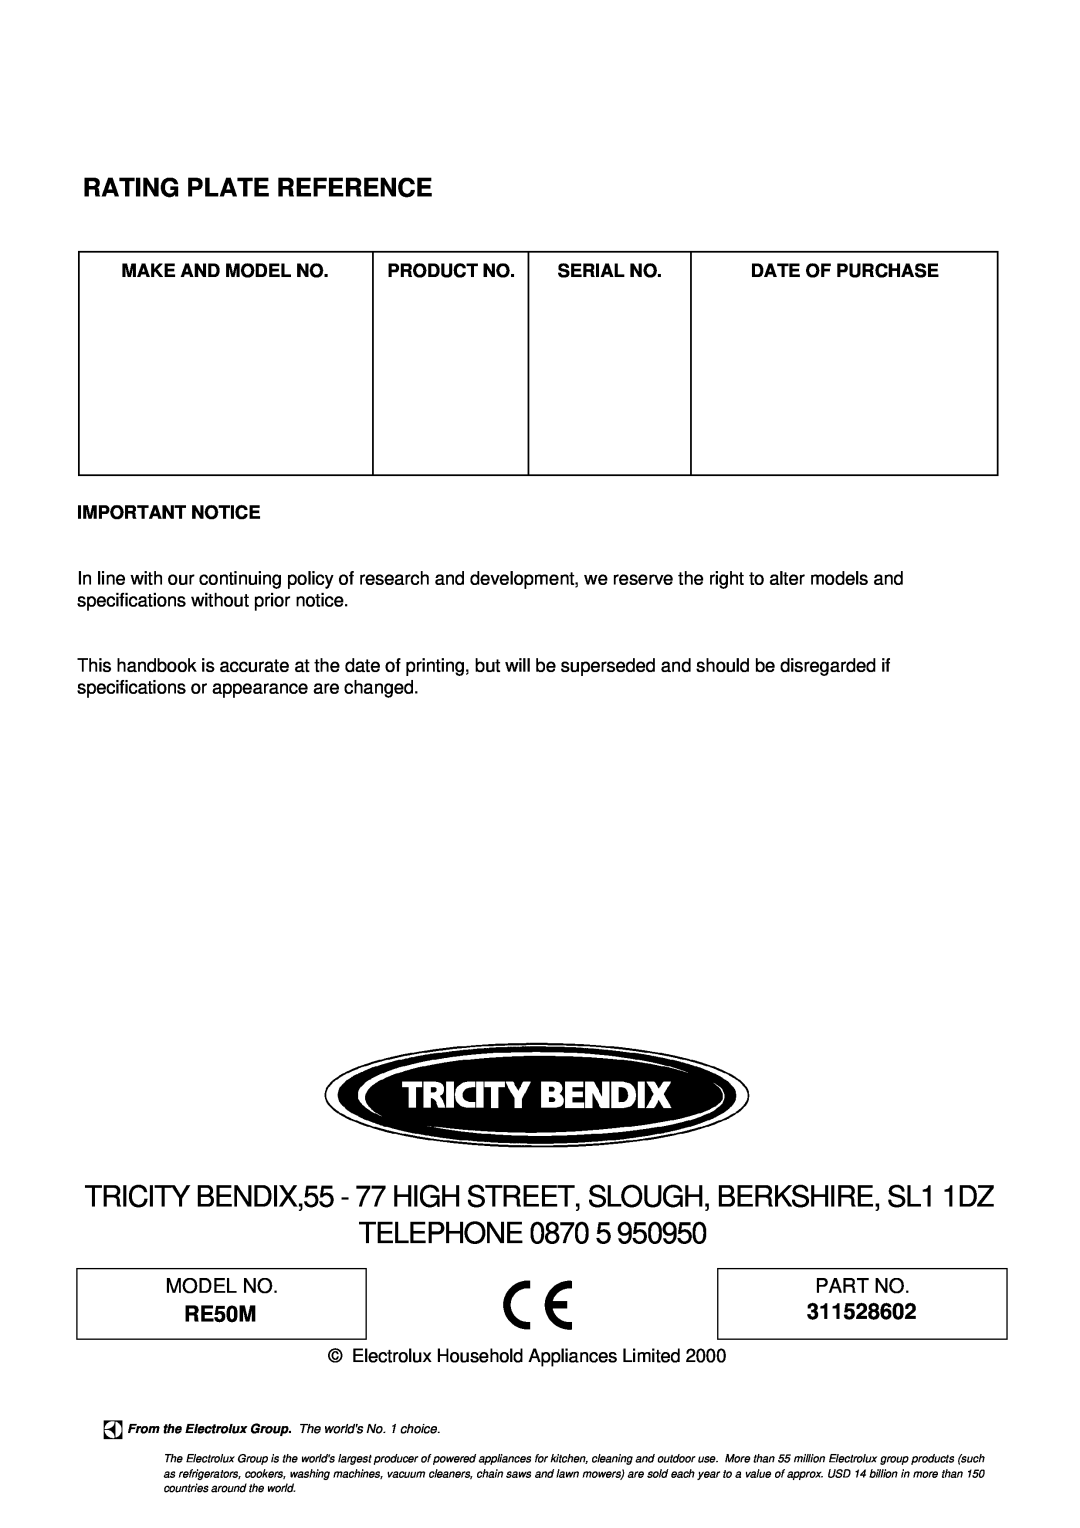 Tricity Bendix RE50M Rating Plate Reference, 311528602, TRICITY BENDIX,55 - 77 HIGH STREET, SLOUGH, BERKSHIRE, SL1 1DZ 